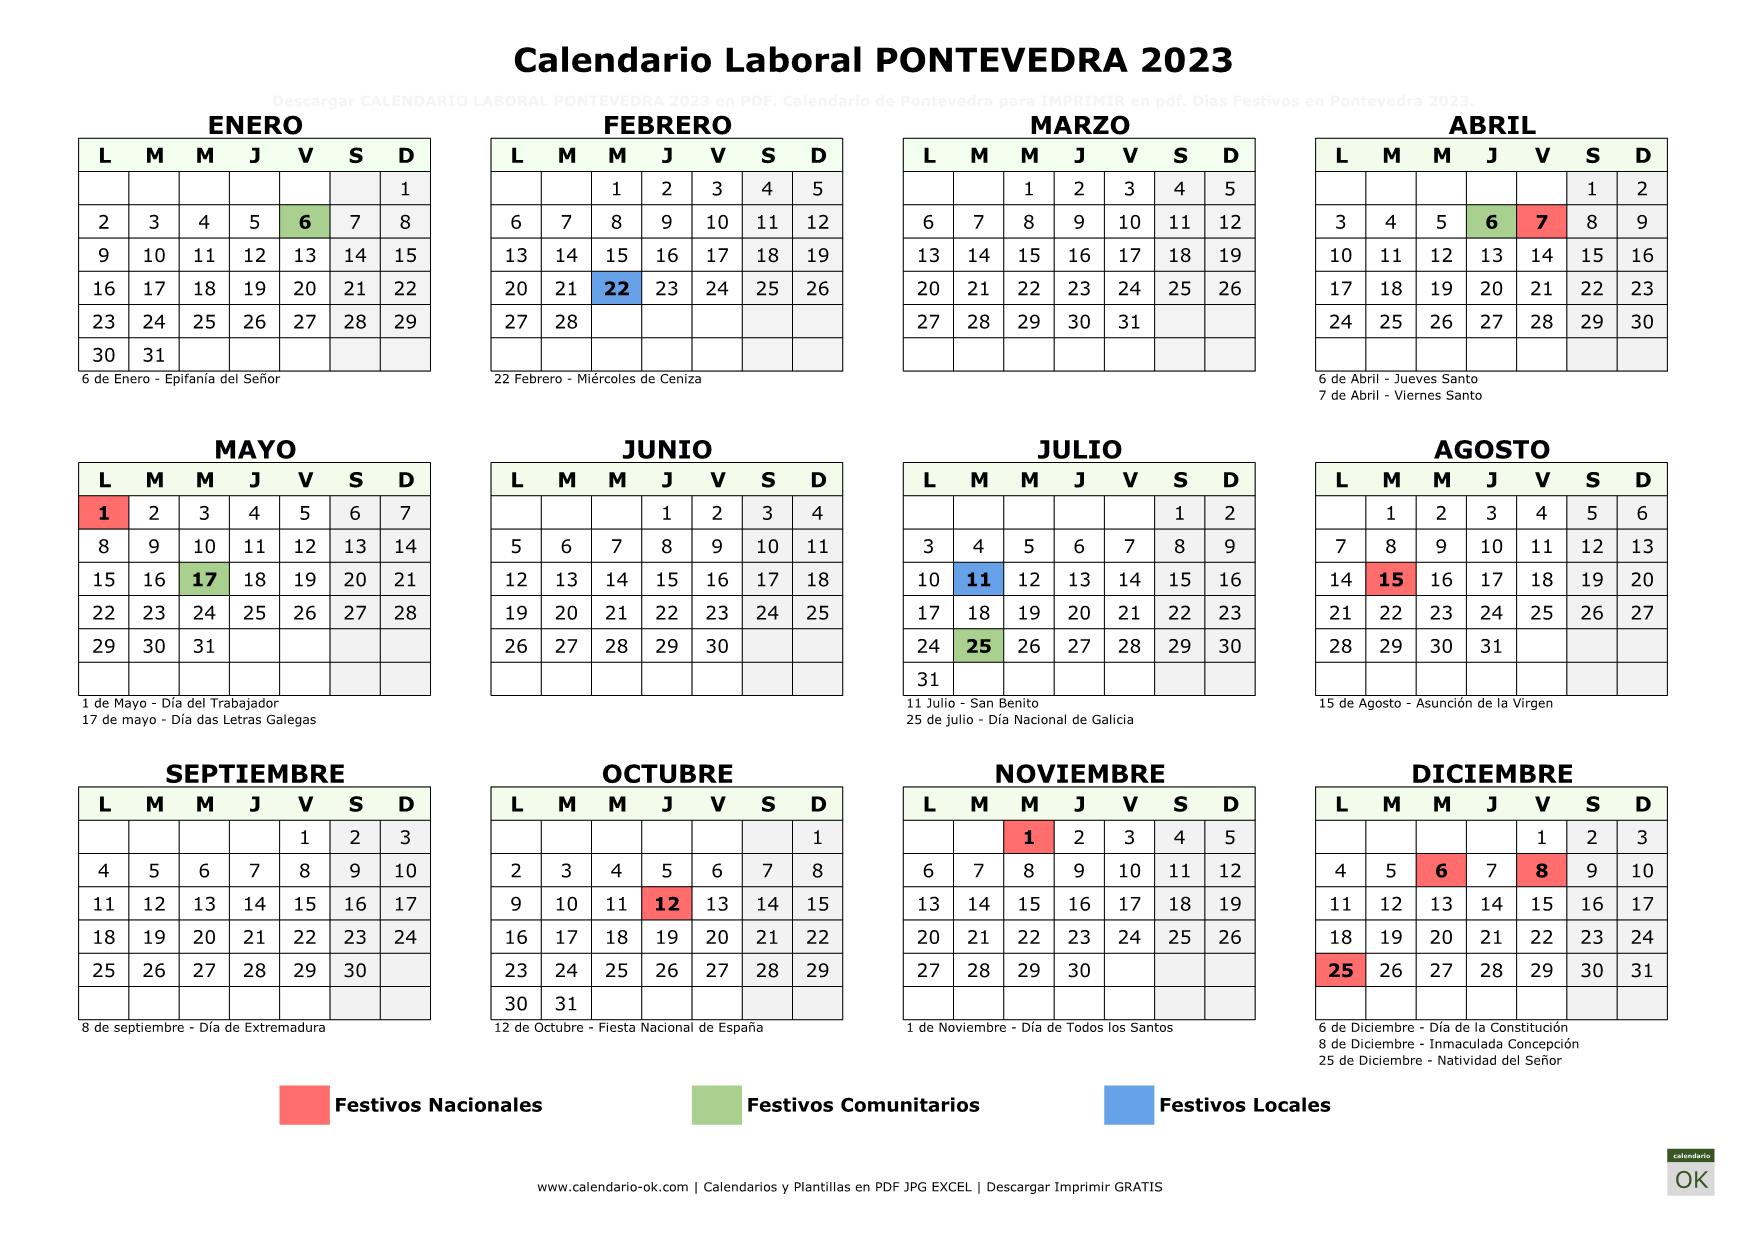 Calendario Laboral Pontevedra 2023 horizontal